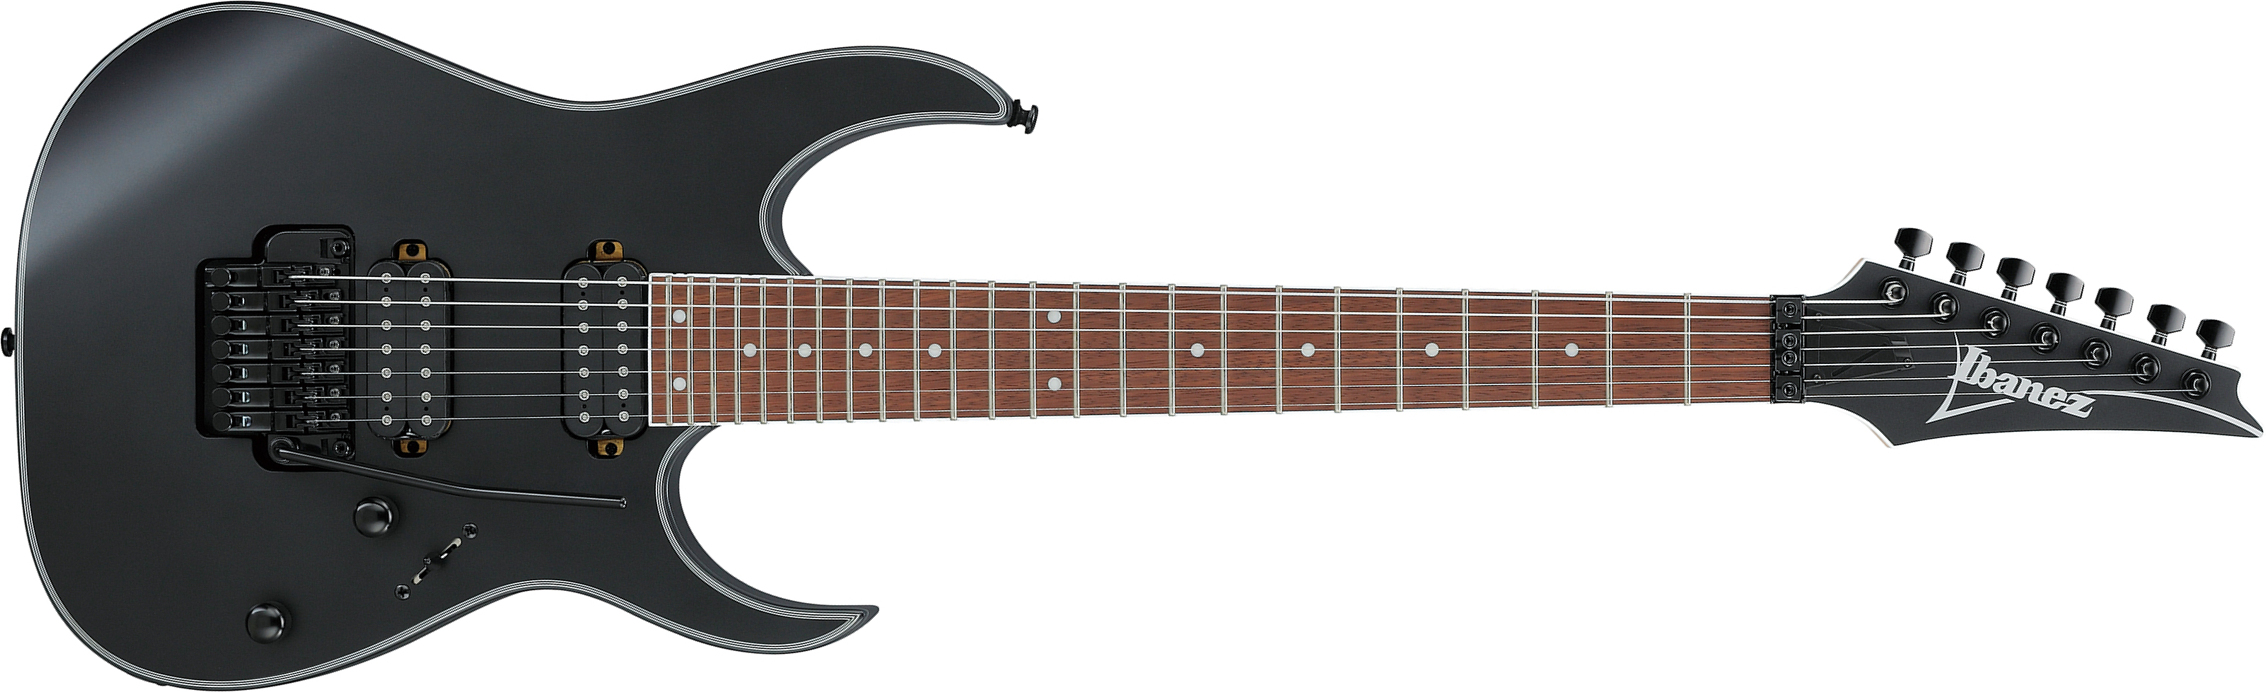 Ibanez Rg7320ex Bkf 7c 2h Fr Jat - Black Flat - 7-snarige elektrische gitaar - Main picture